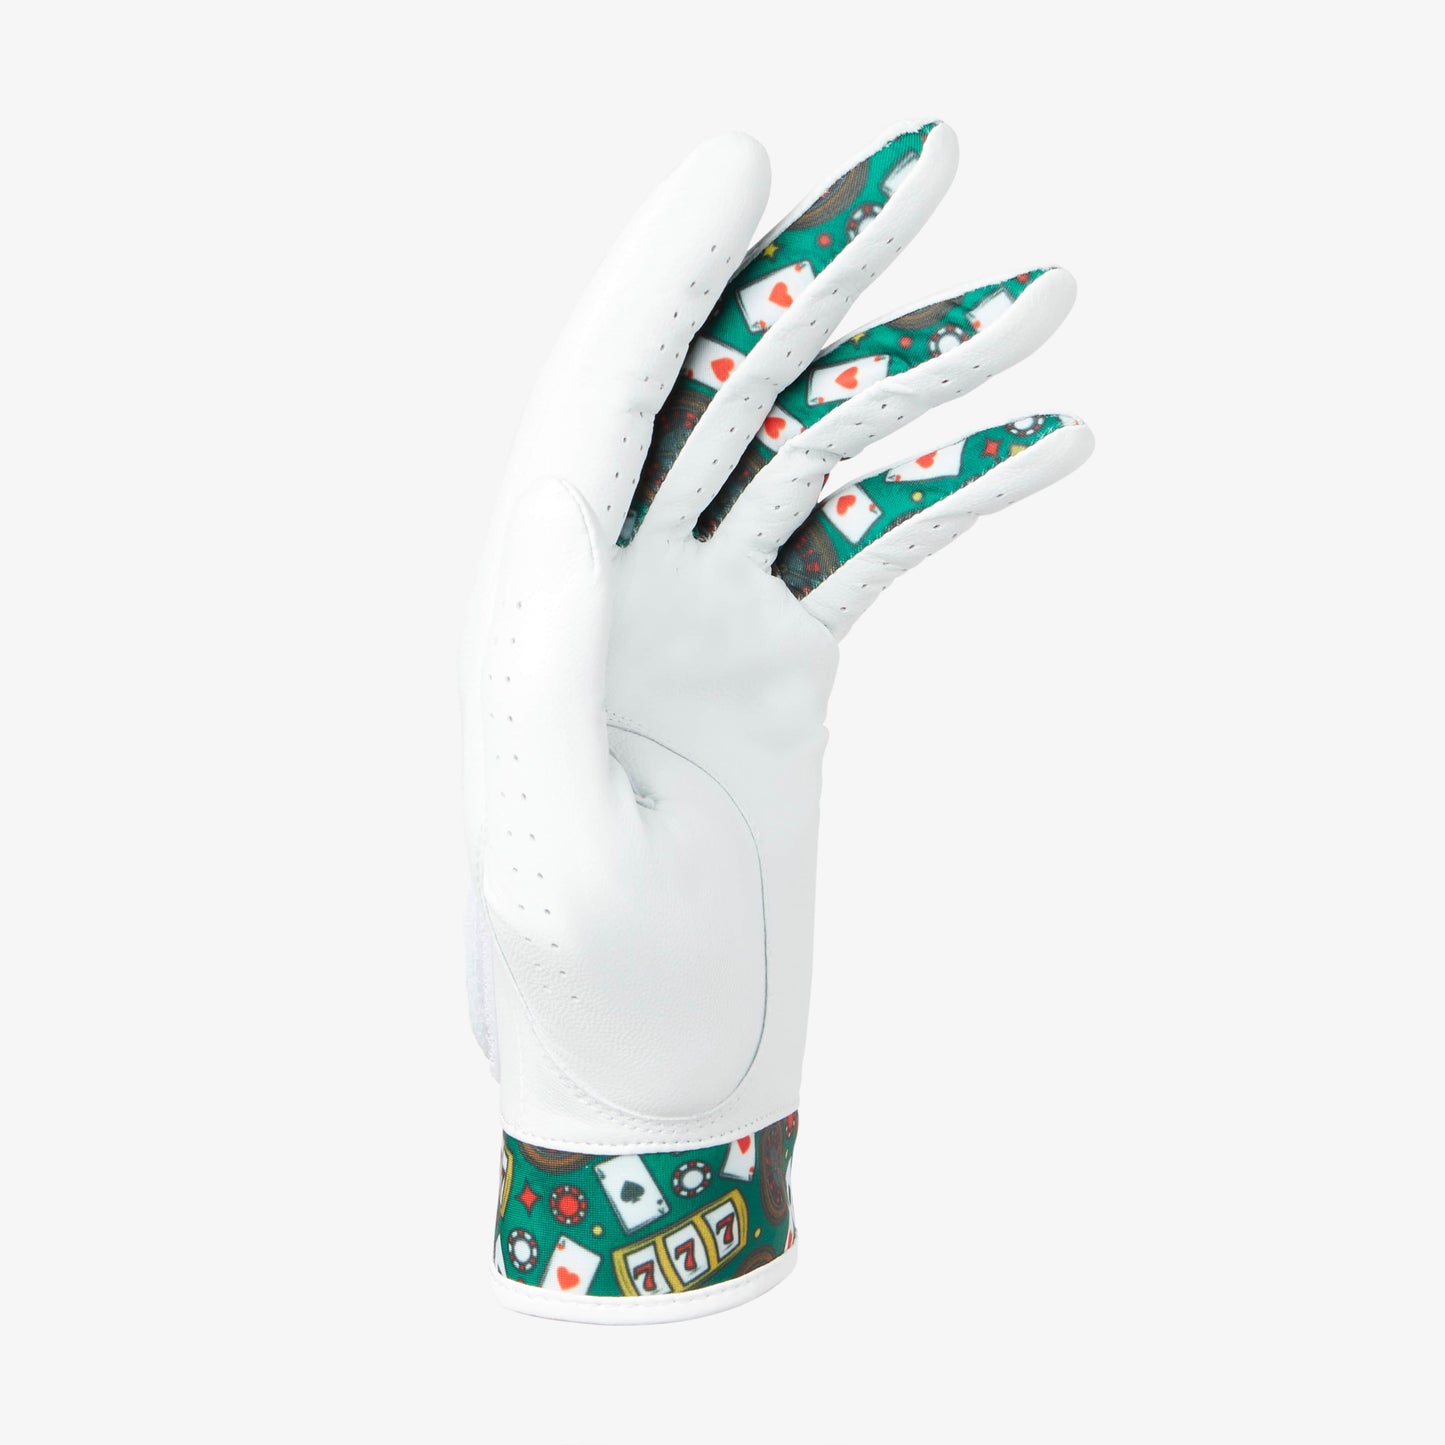 Cool golf glove with casino design